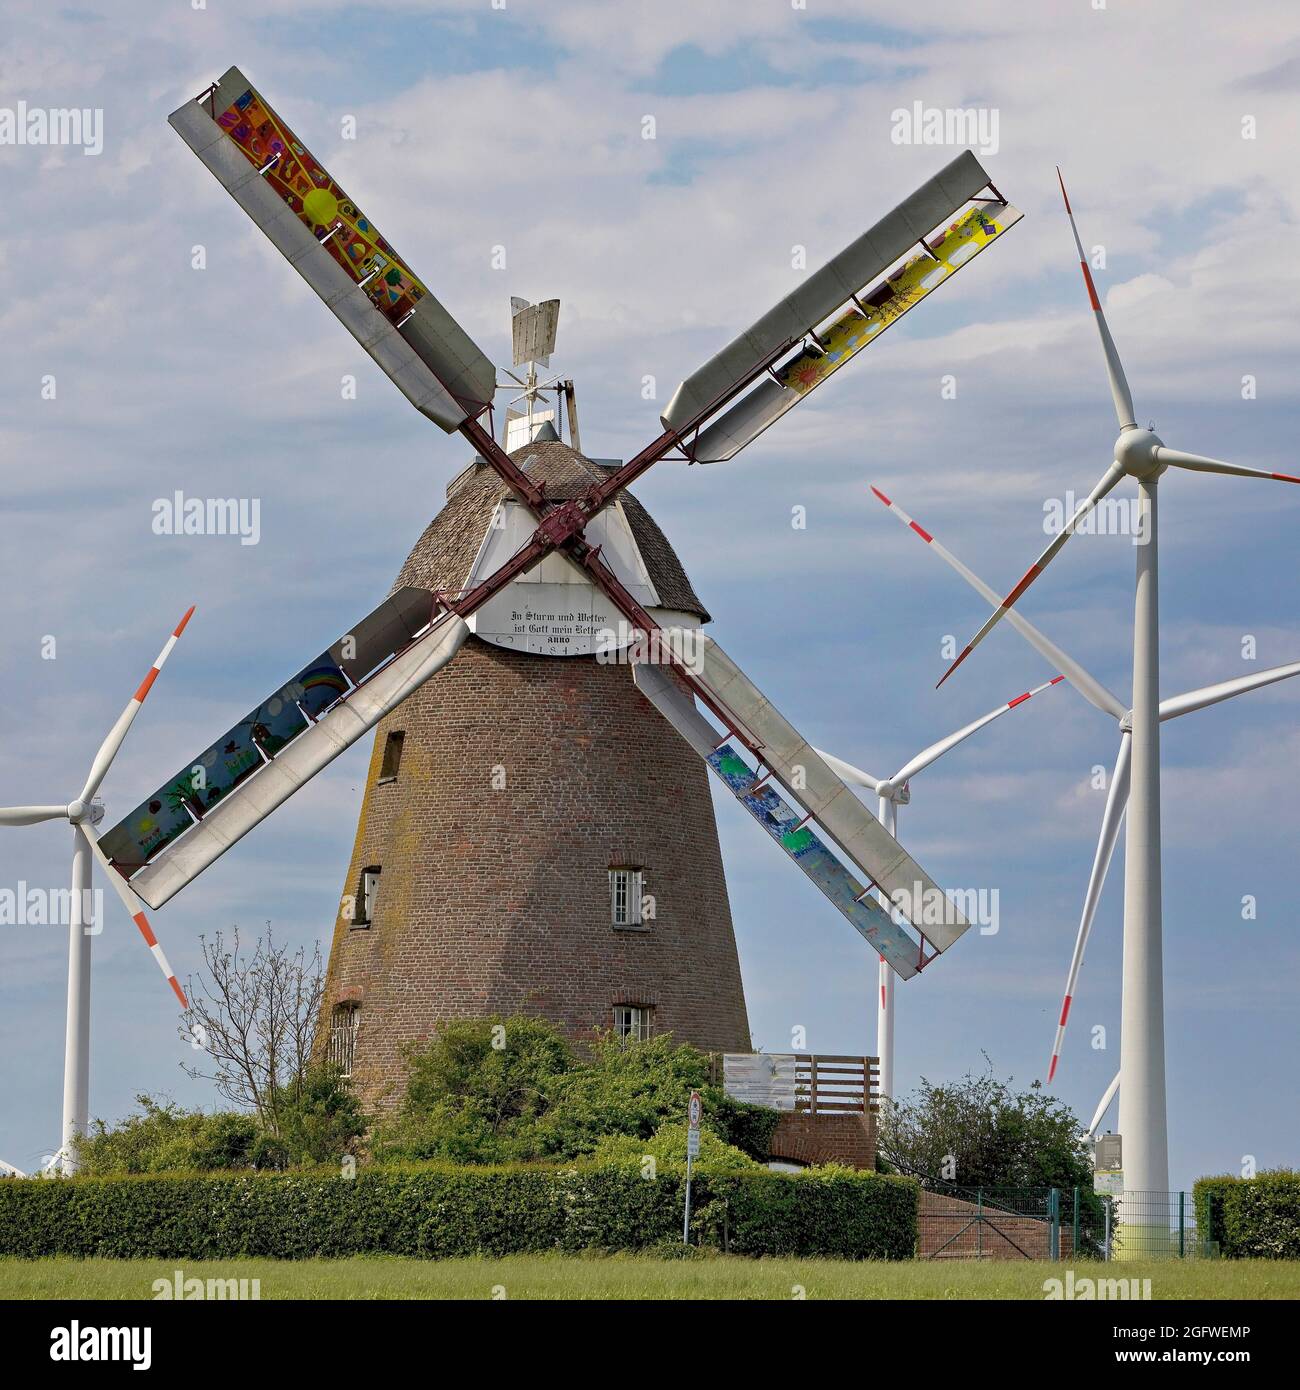 Museum windmill in Breberer, Selfkant-Muehlenstrasse with wind wheels, Germany, North Rhine-Westphalia, Lower Rhine, Gangelt Stock Photo